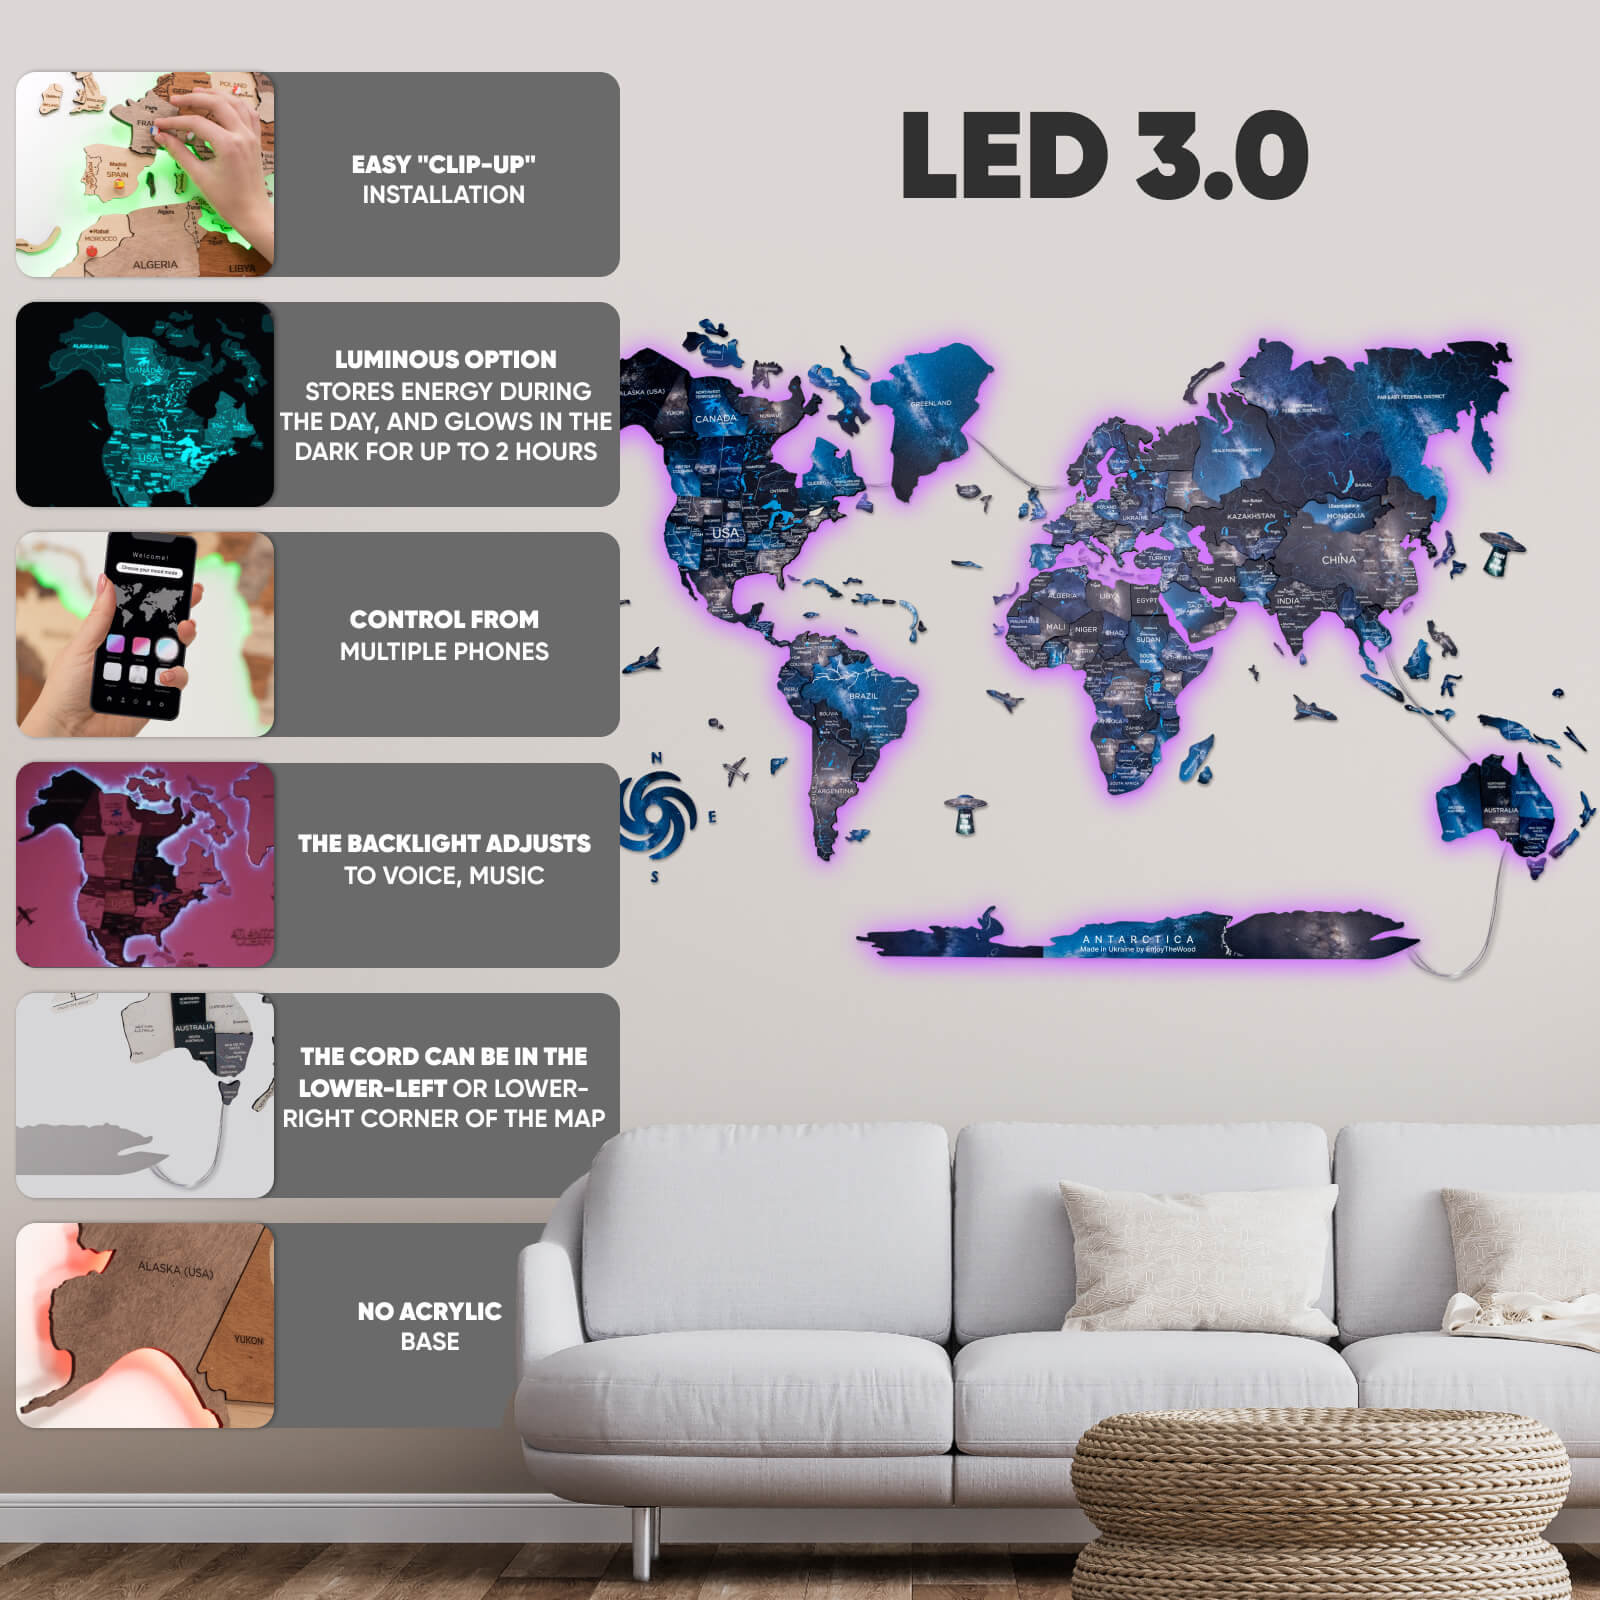 3D LED / LUMINOSO Mapamundi de Madera 3.0 Espacio